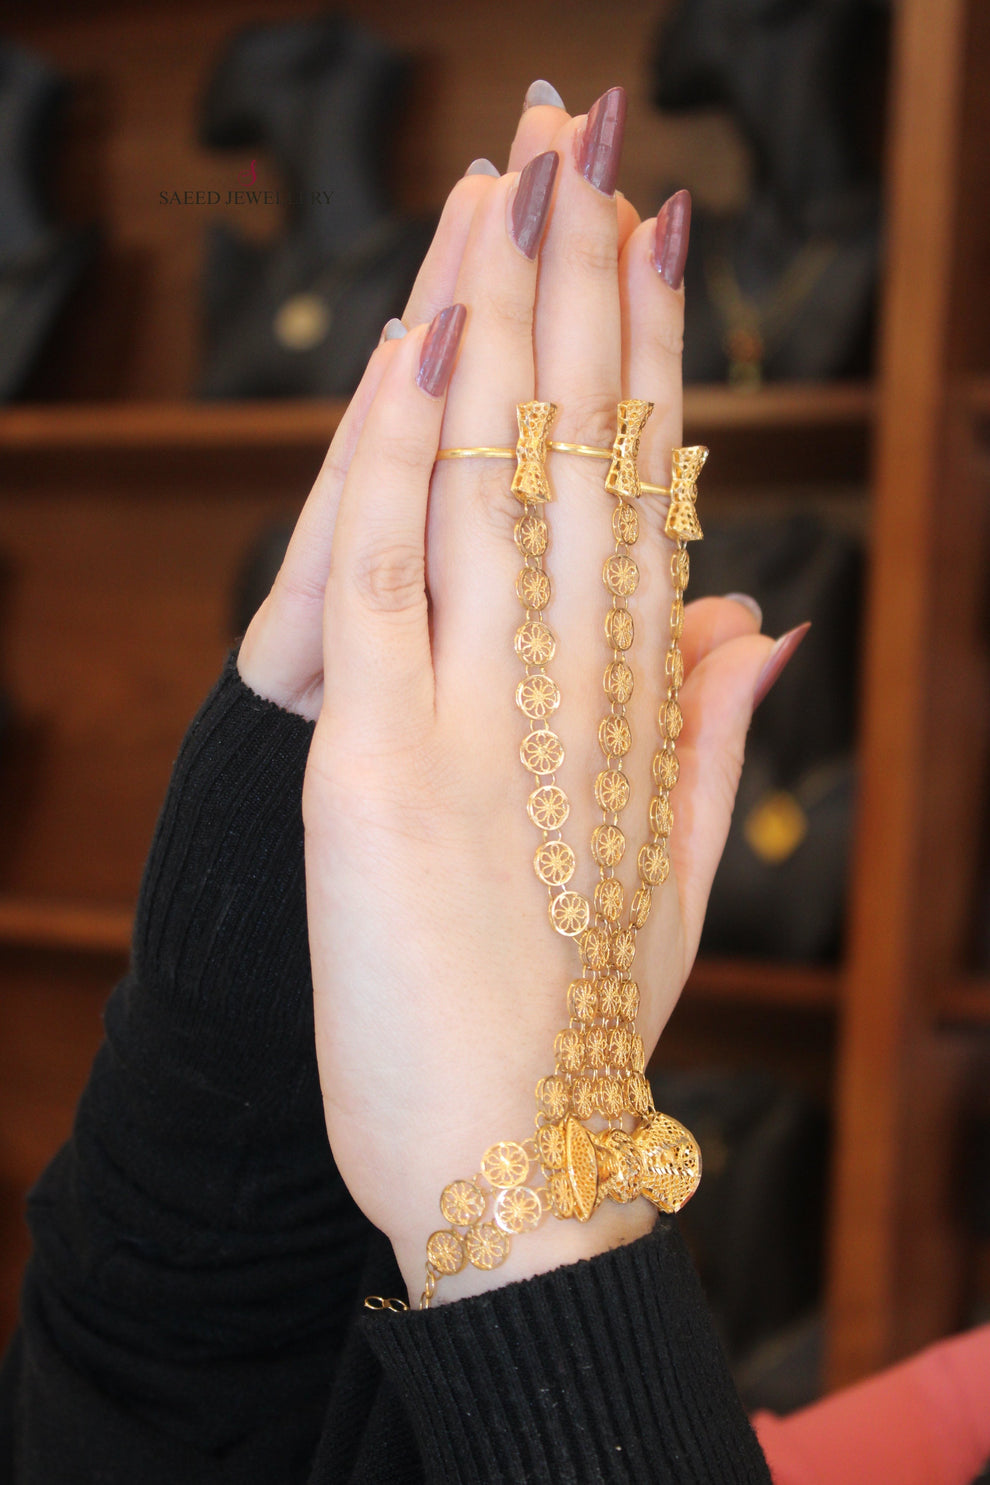 21K Gold Kuwaiti Hand Bracelet by Saeed Jewelry - Image 2